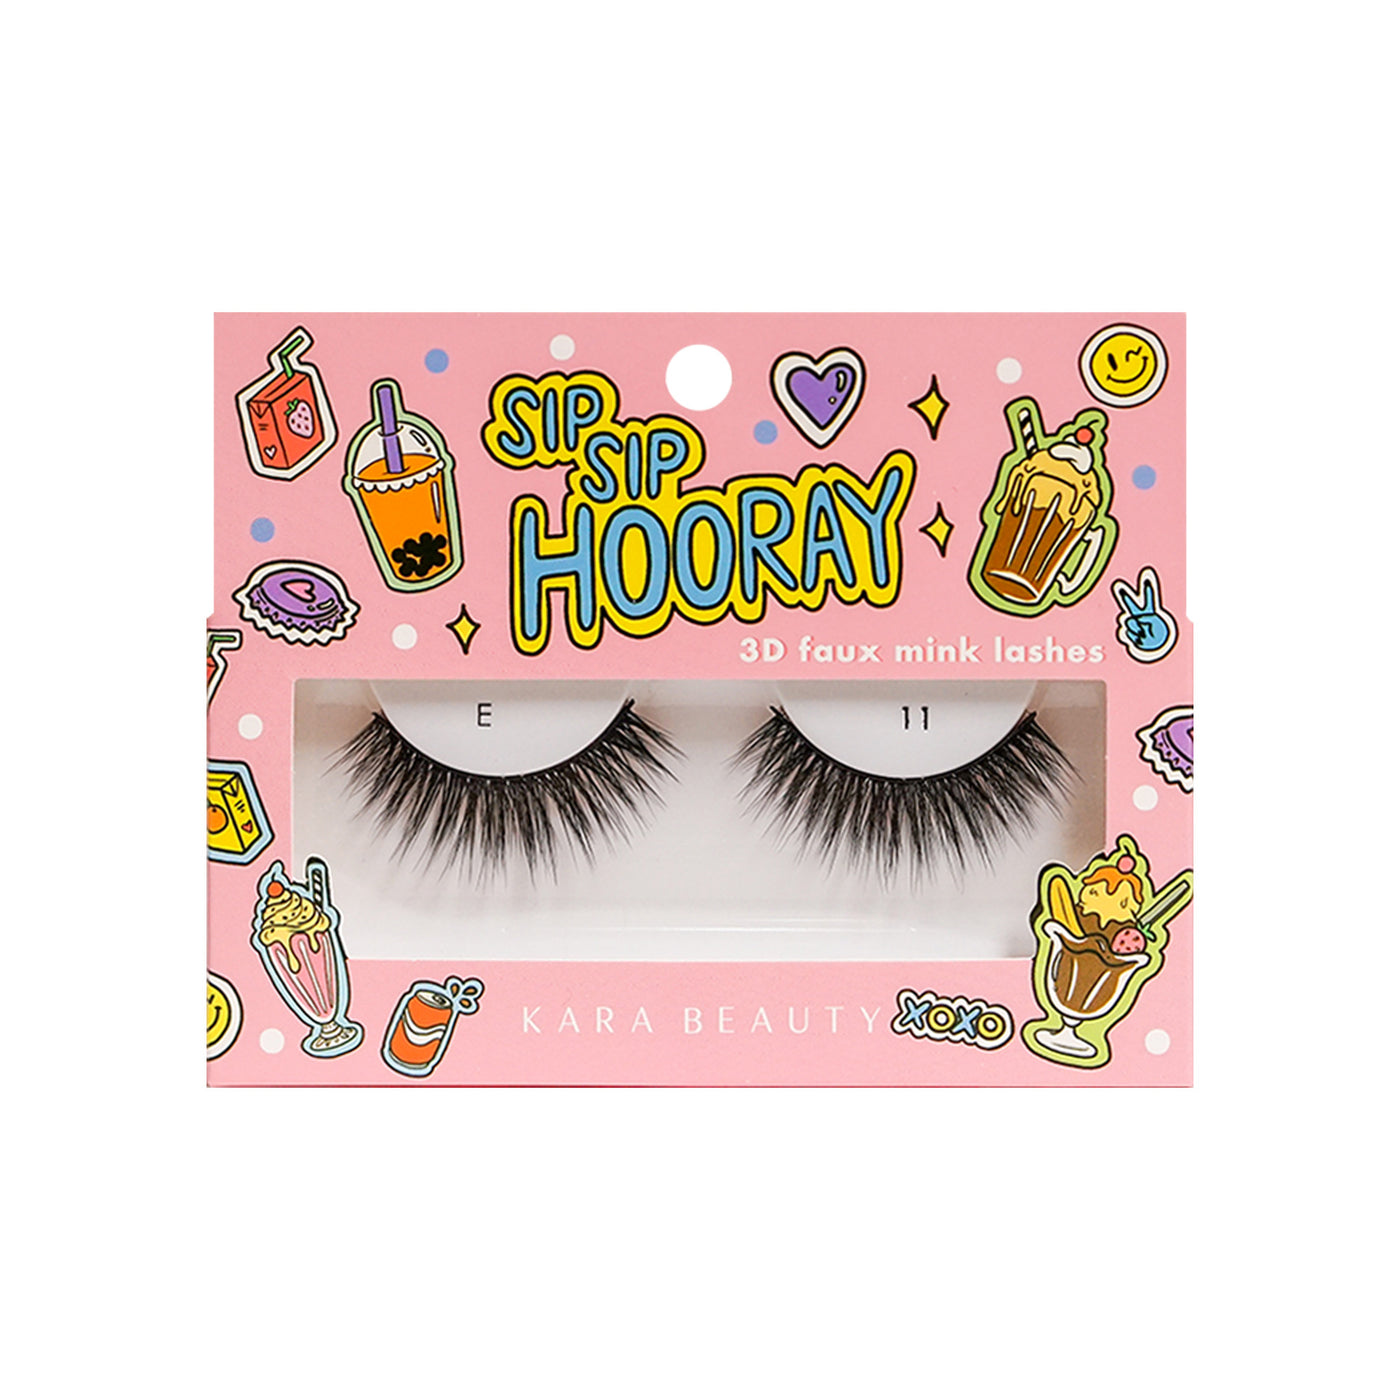 Kara Beauty's Sip Sip Hooray 3D Faux Mink - Synthetic Strip Eyelashes Style E11